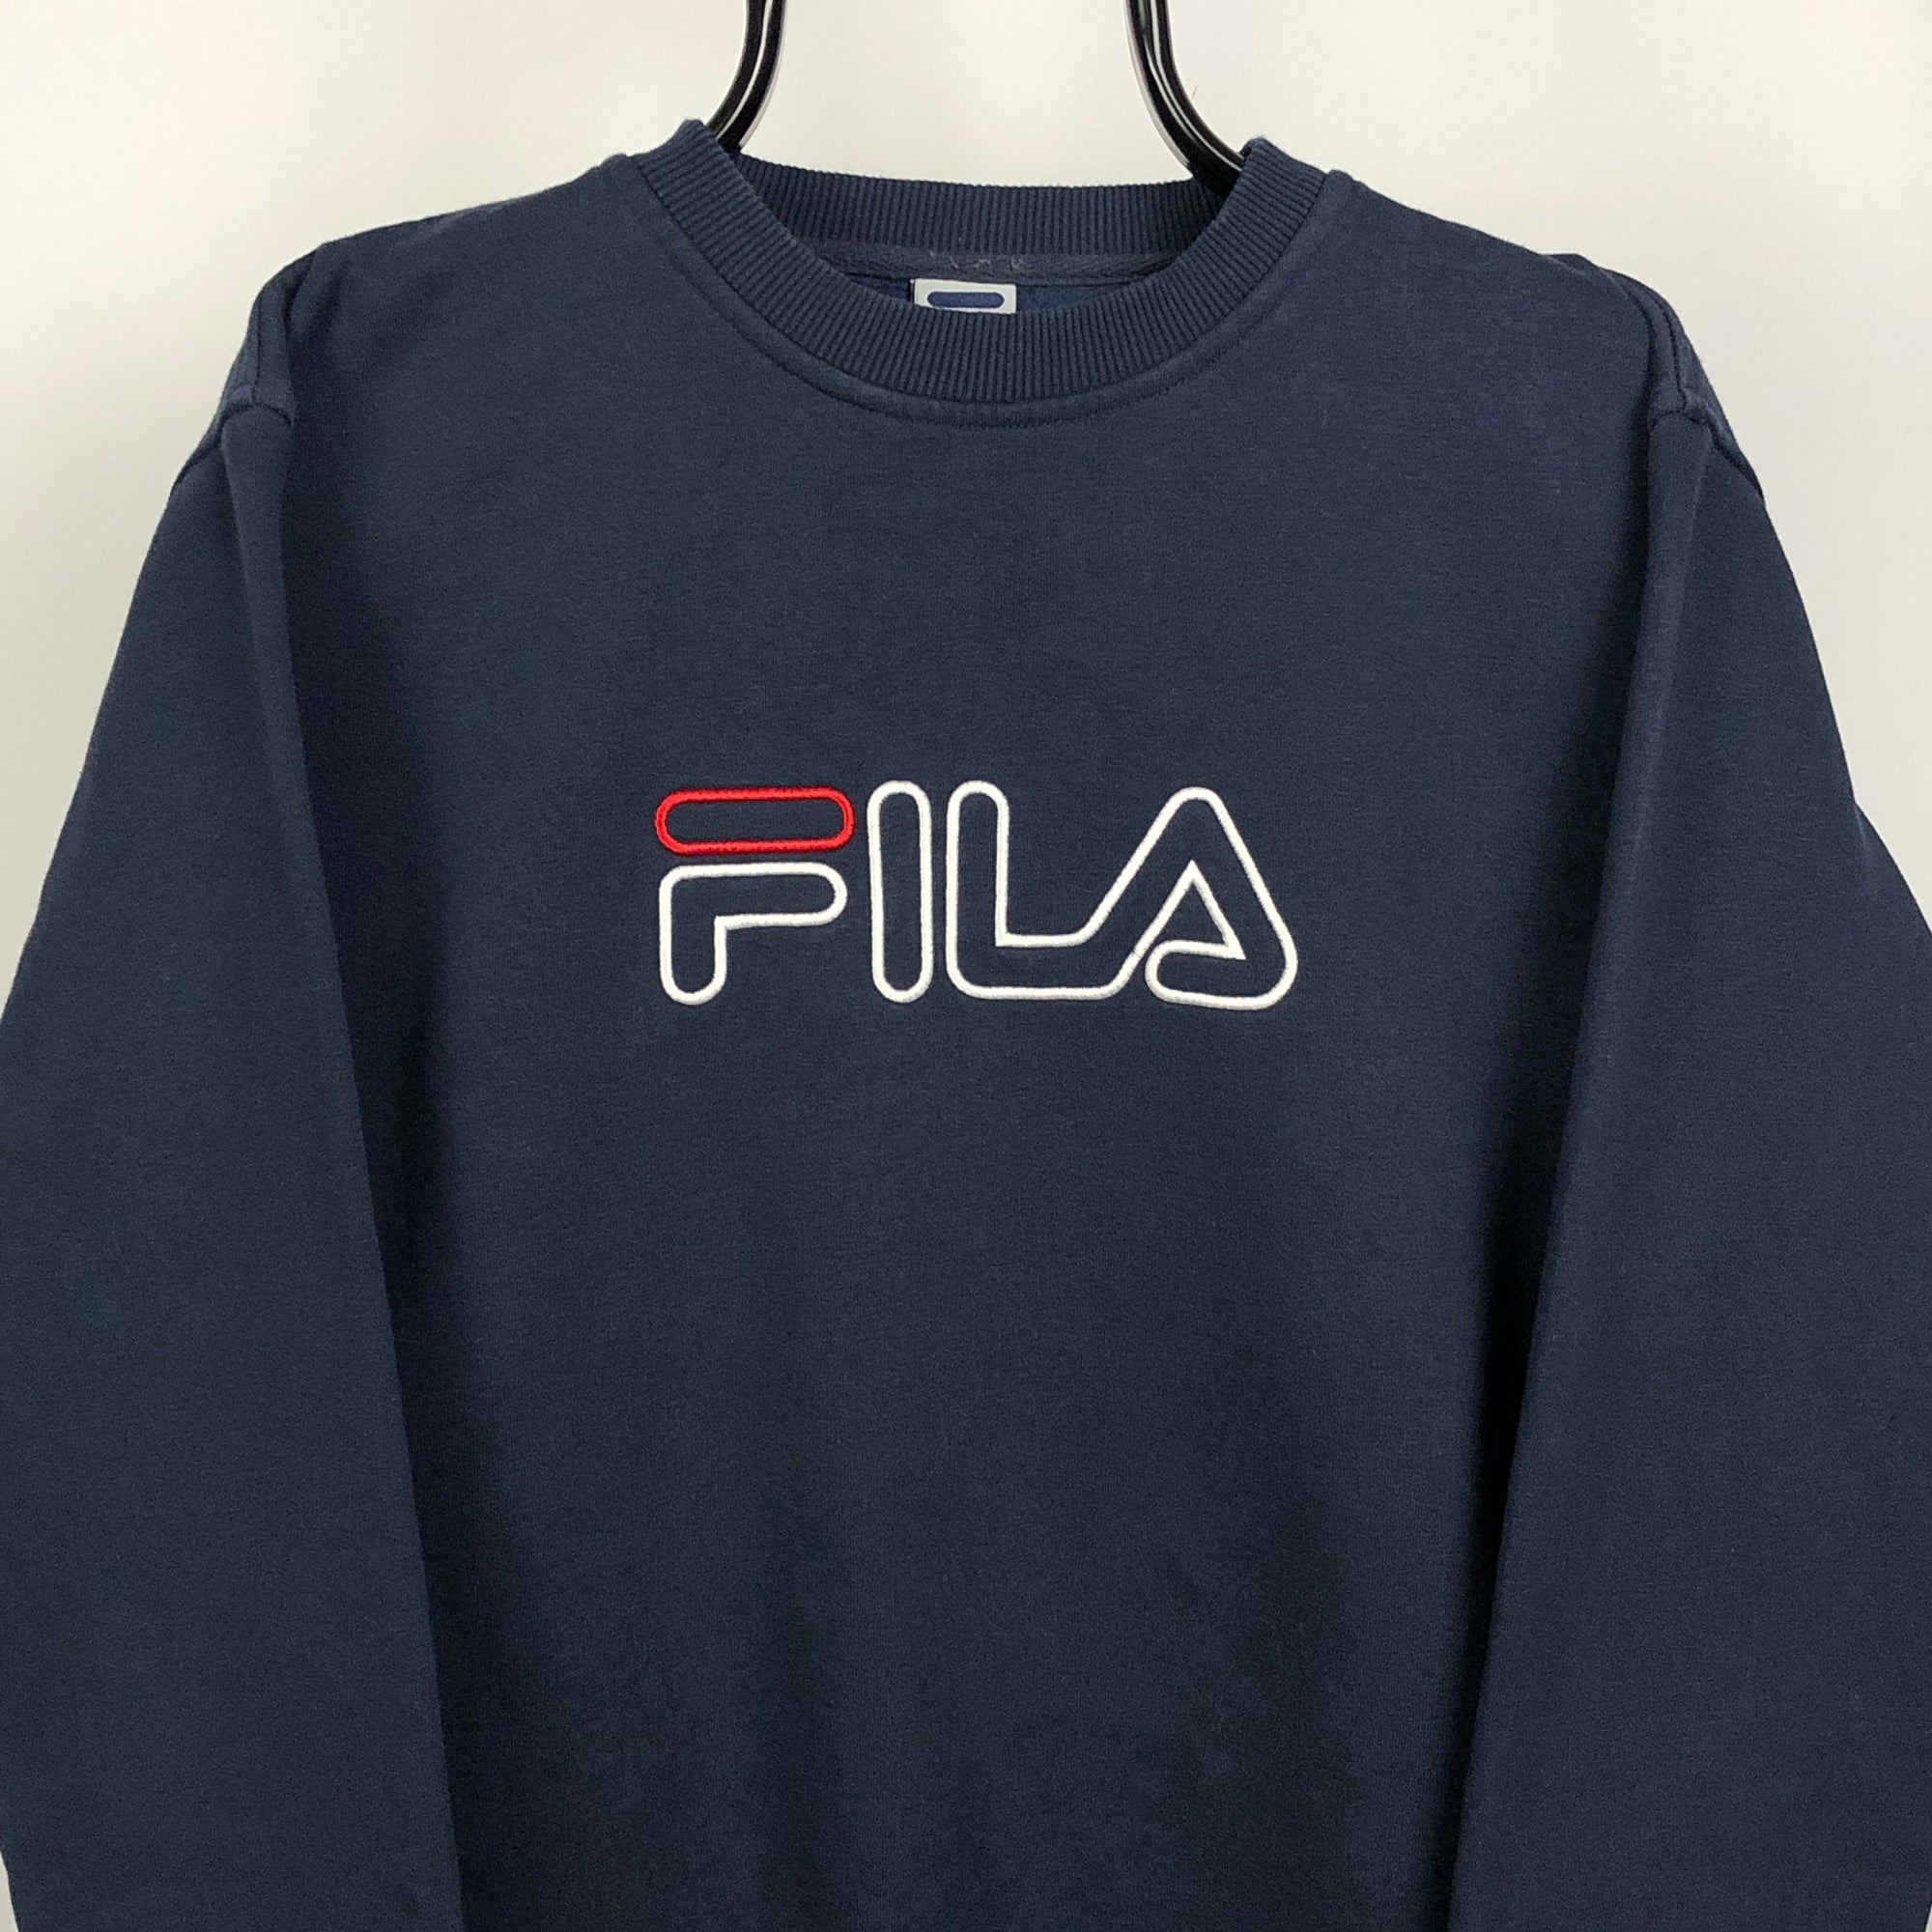 Vintage Fila Spellout Sweatshirt in Navy - Men's Medium/Women's Large